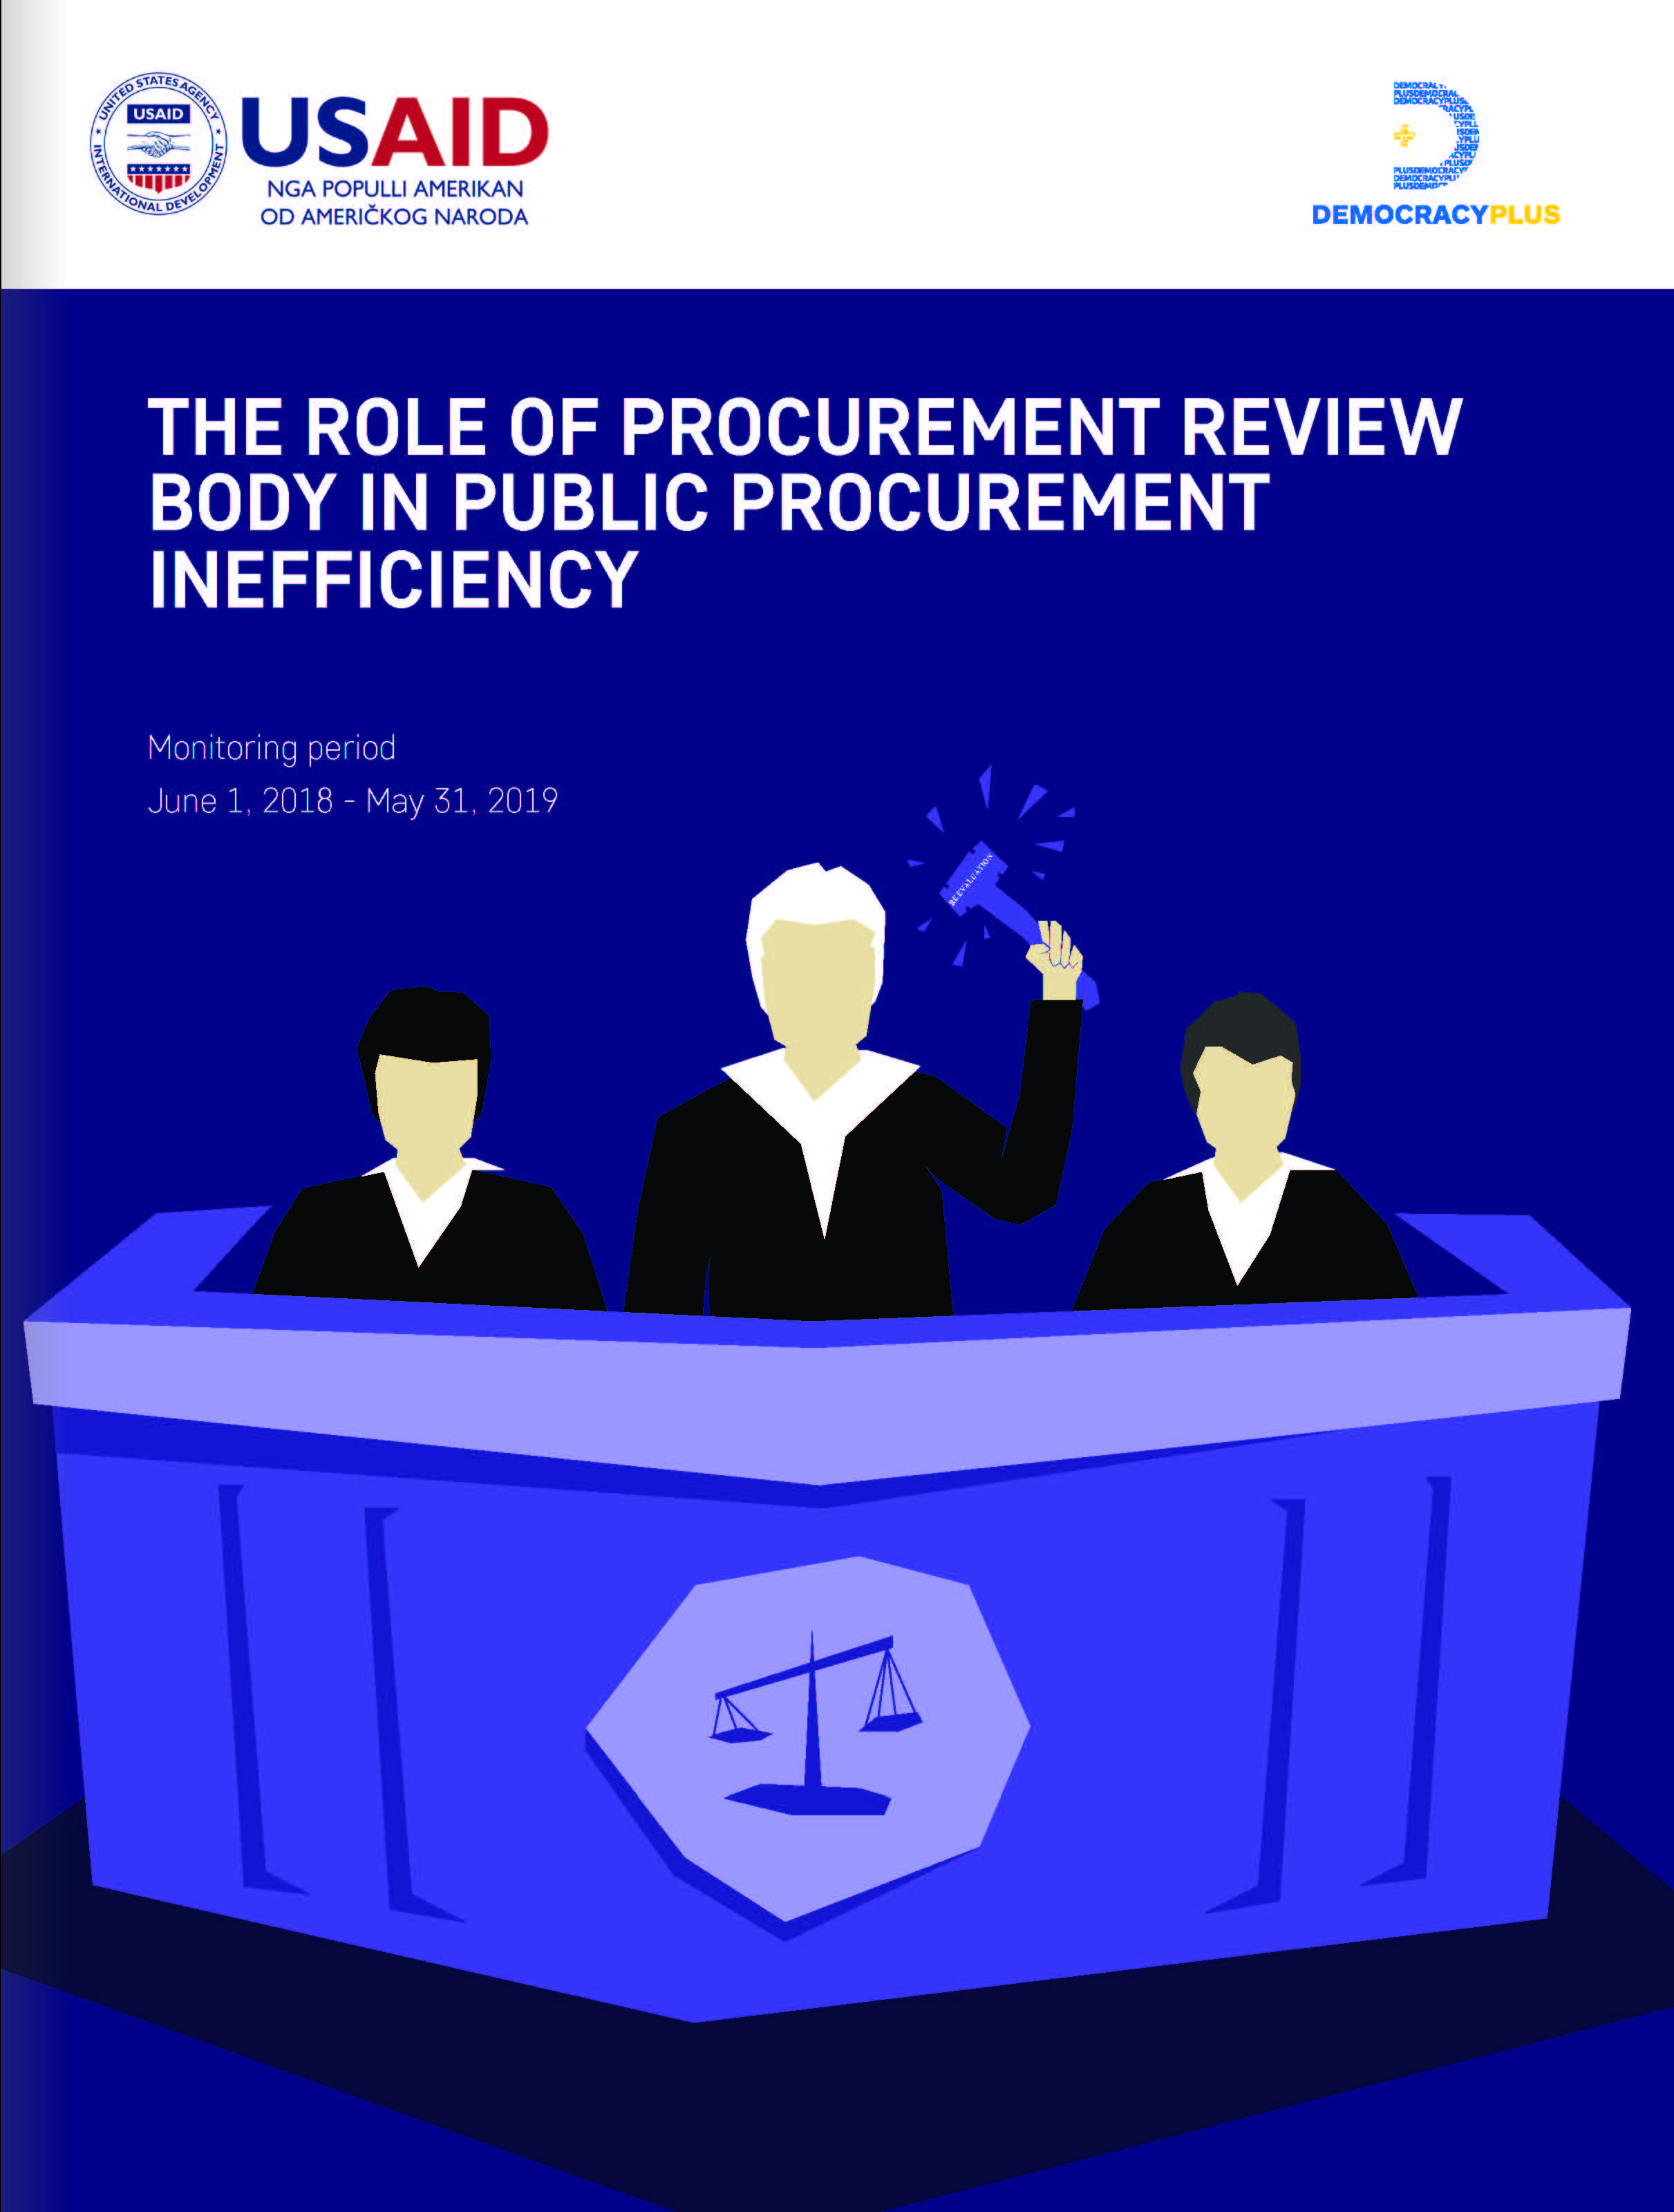 The role of Procurement Review Body in public procurement inefficiency